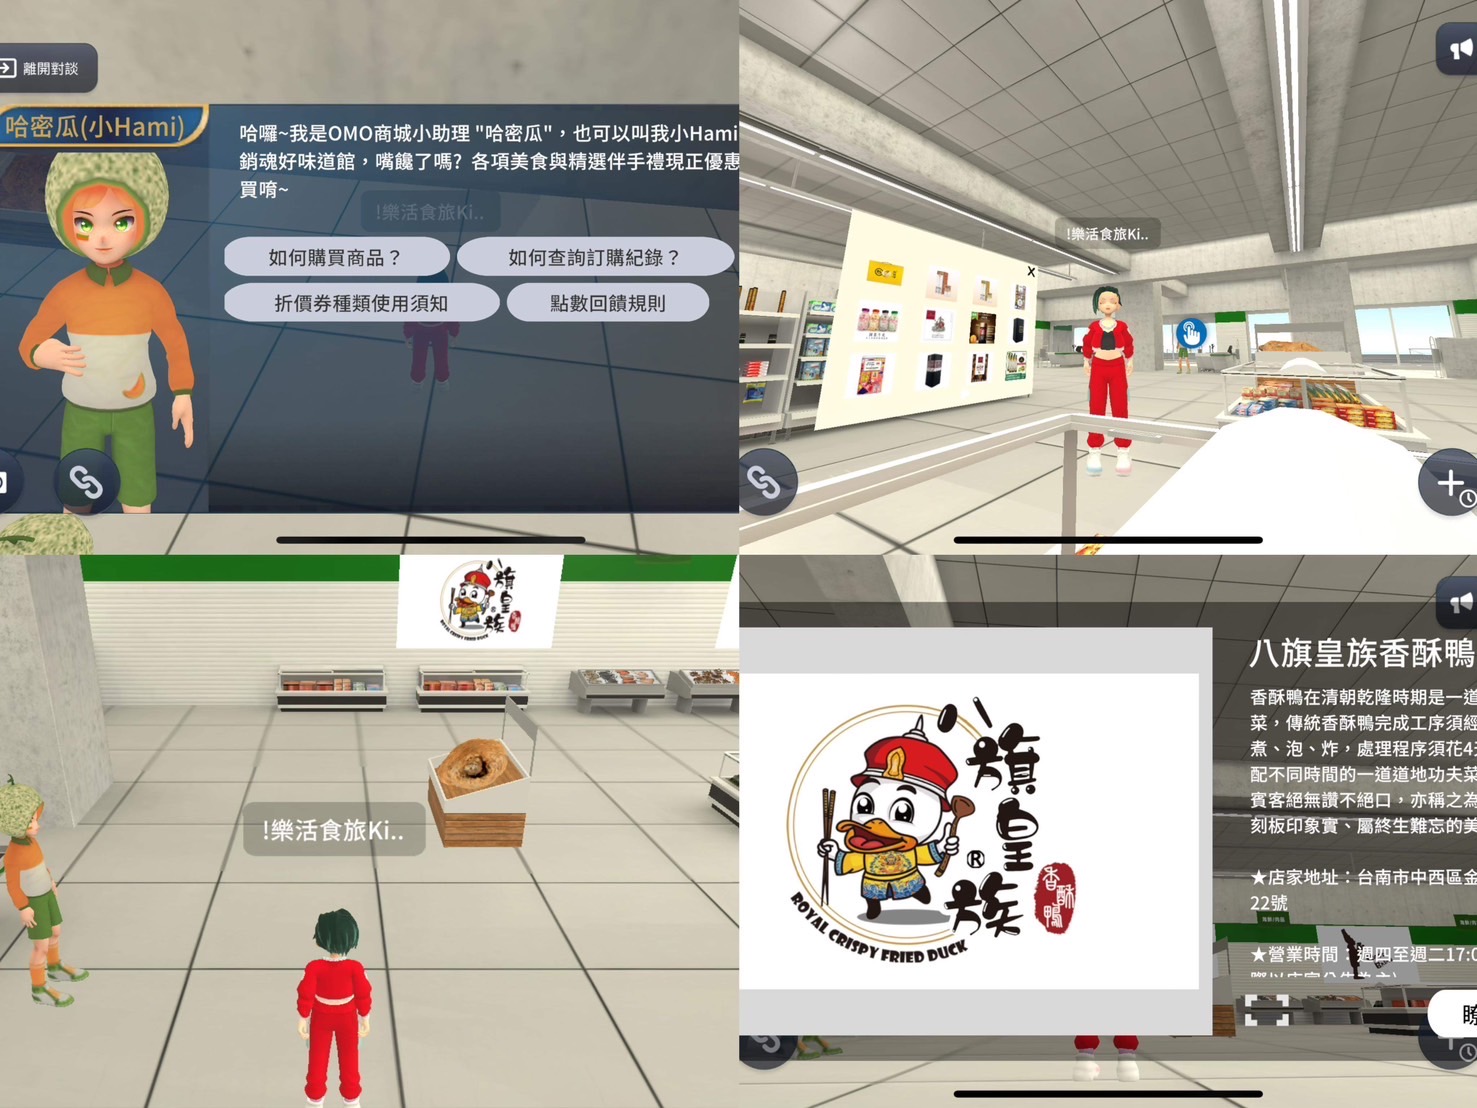 YoCity元宇宙｜台南府城輕旅行，以VR虛擬實境引領你來一場穿越時空背景即時線上體驗